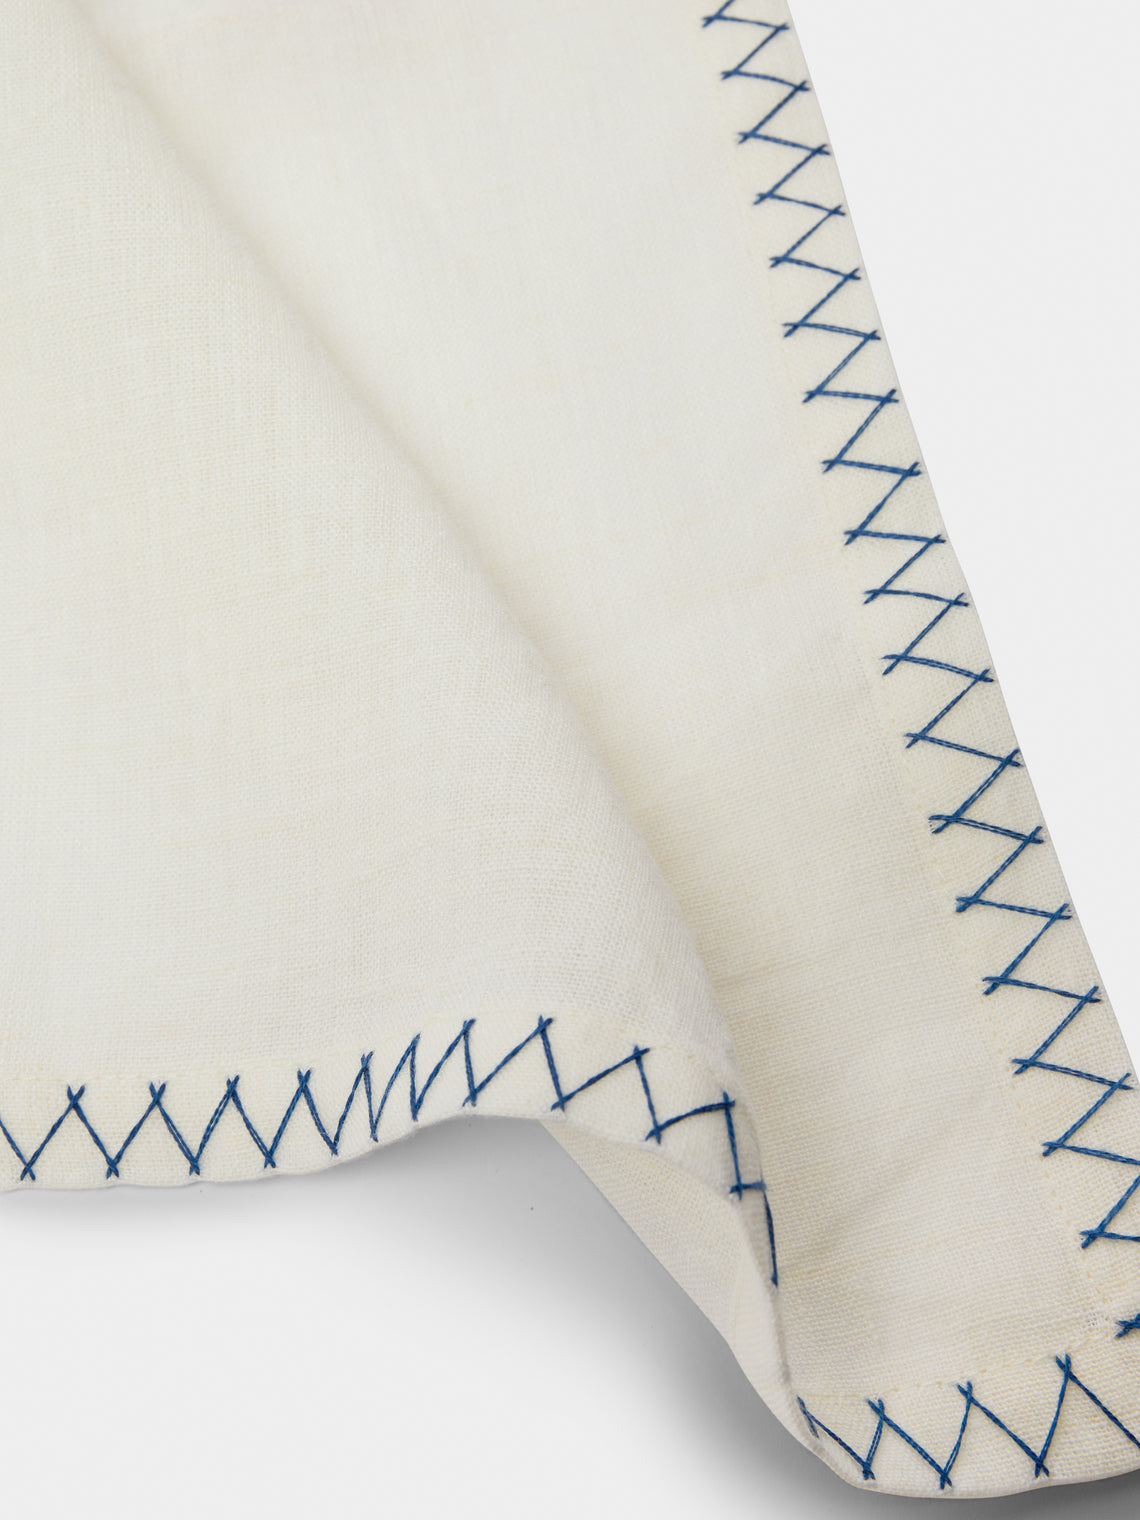 Malaika - Zigzag Hand-Embroidered Linen Napkins (Set of 4) - Blue - ABASK